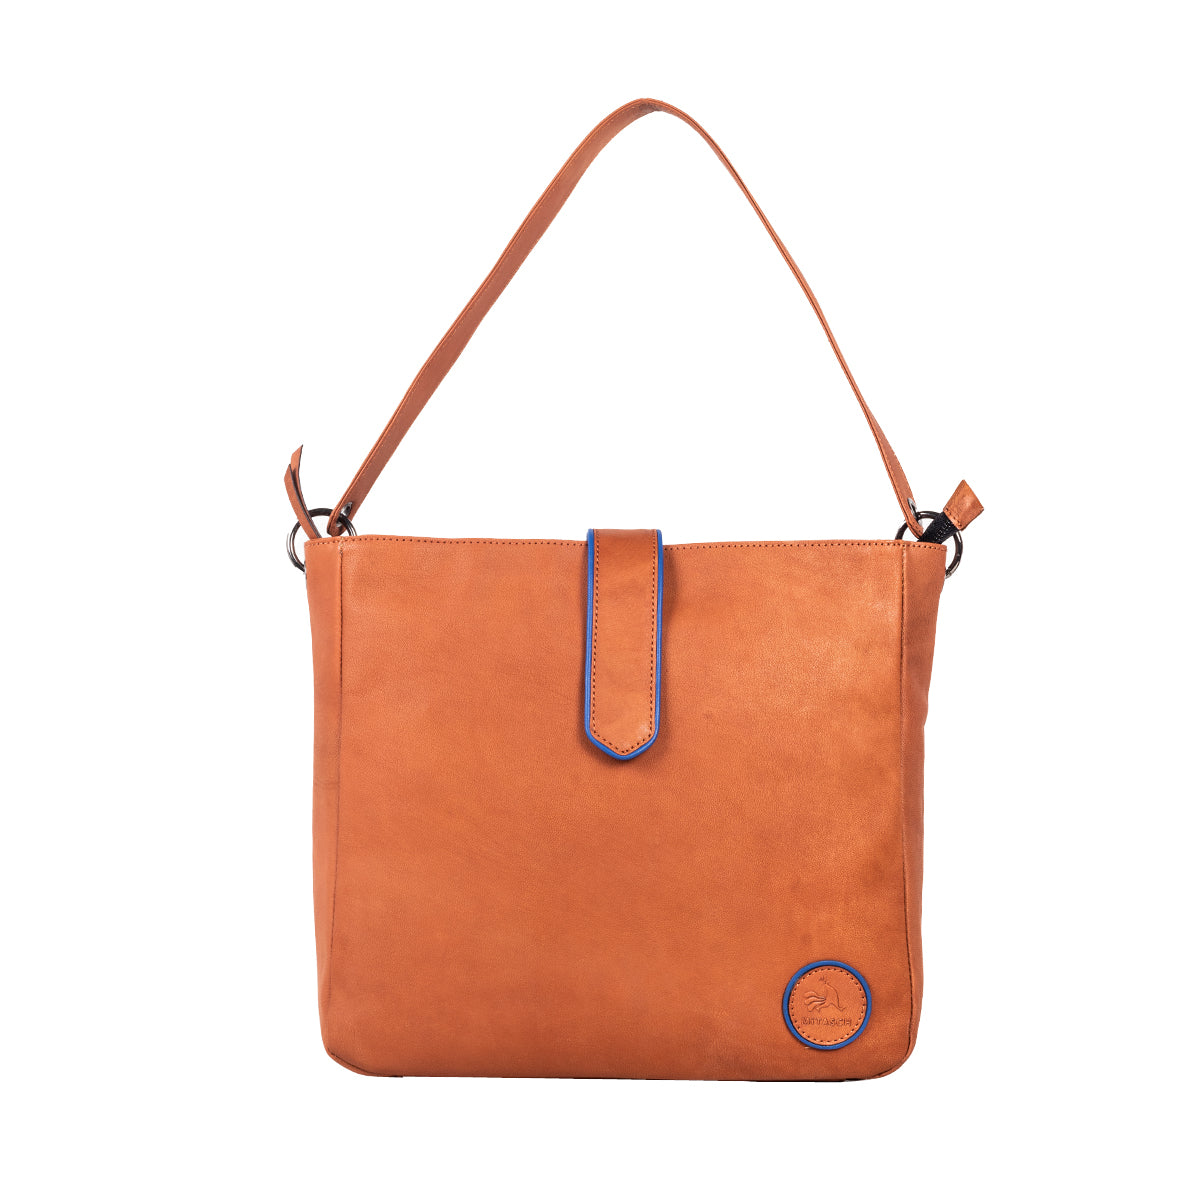 Leonore - spacious handbag